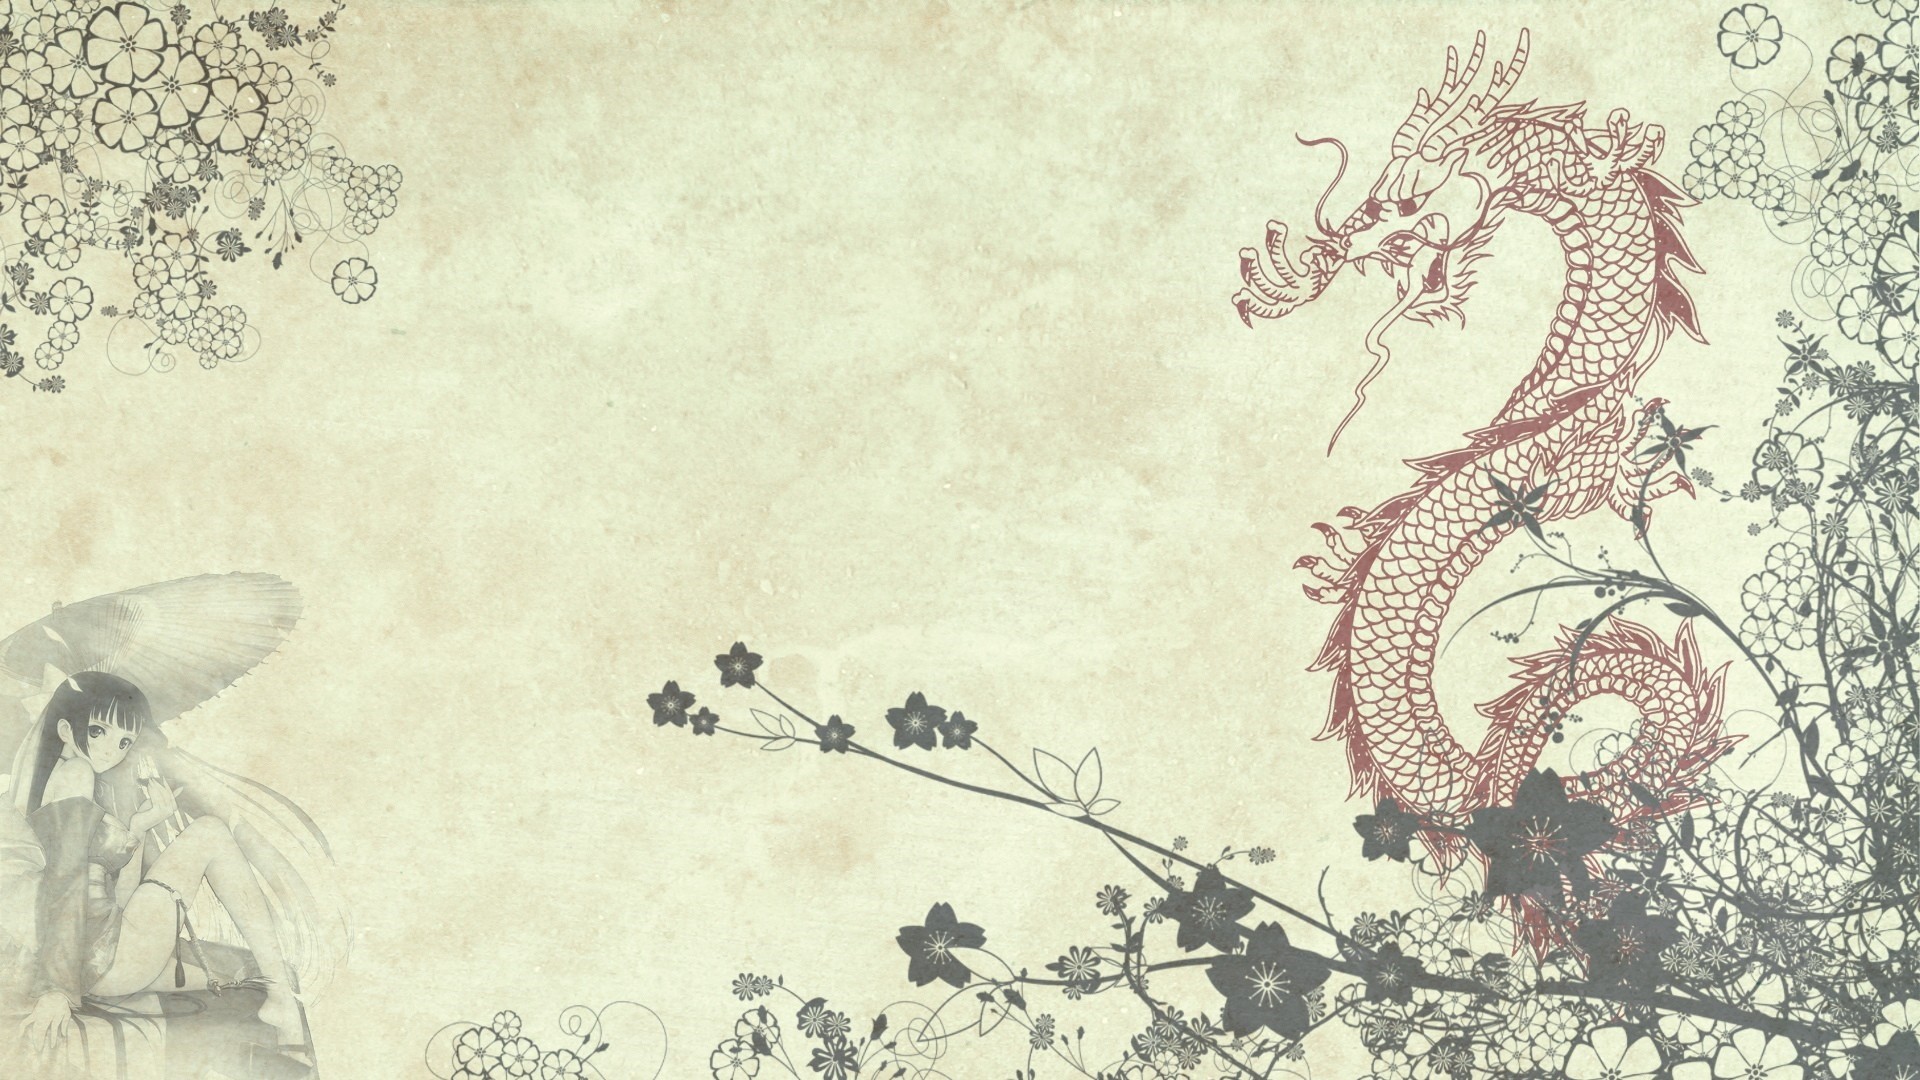 Chinese Dragon wallpaper photo hd